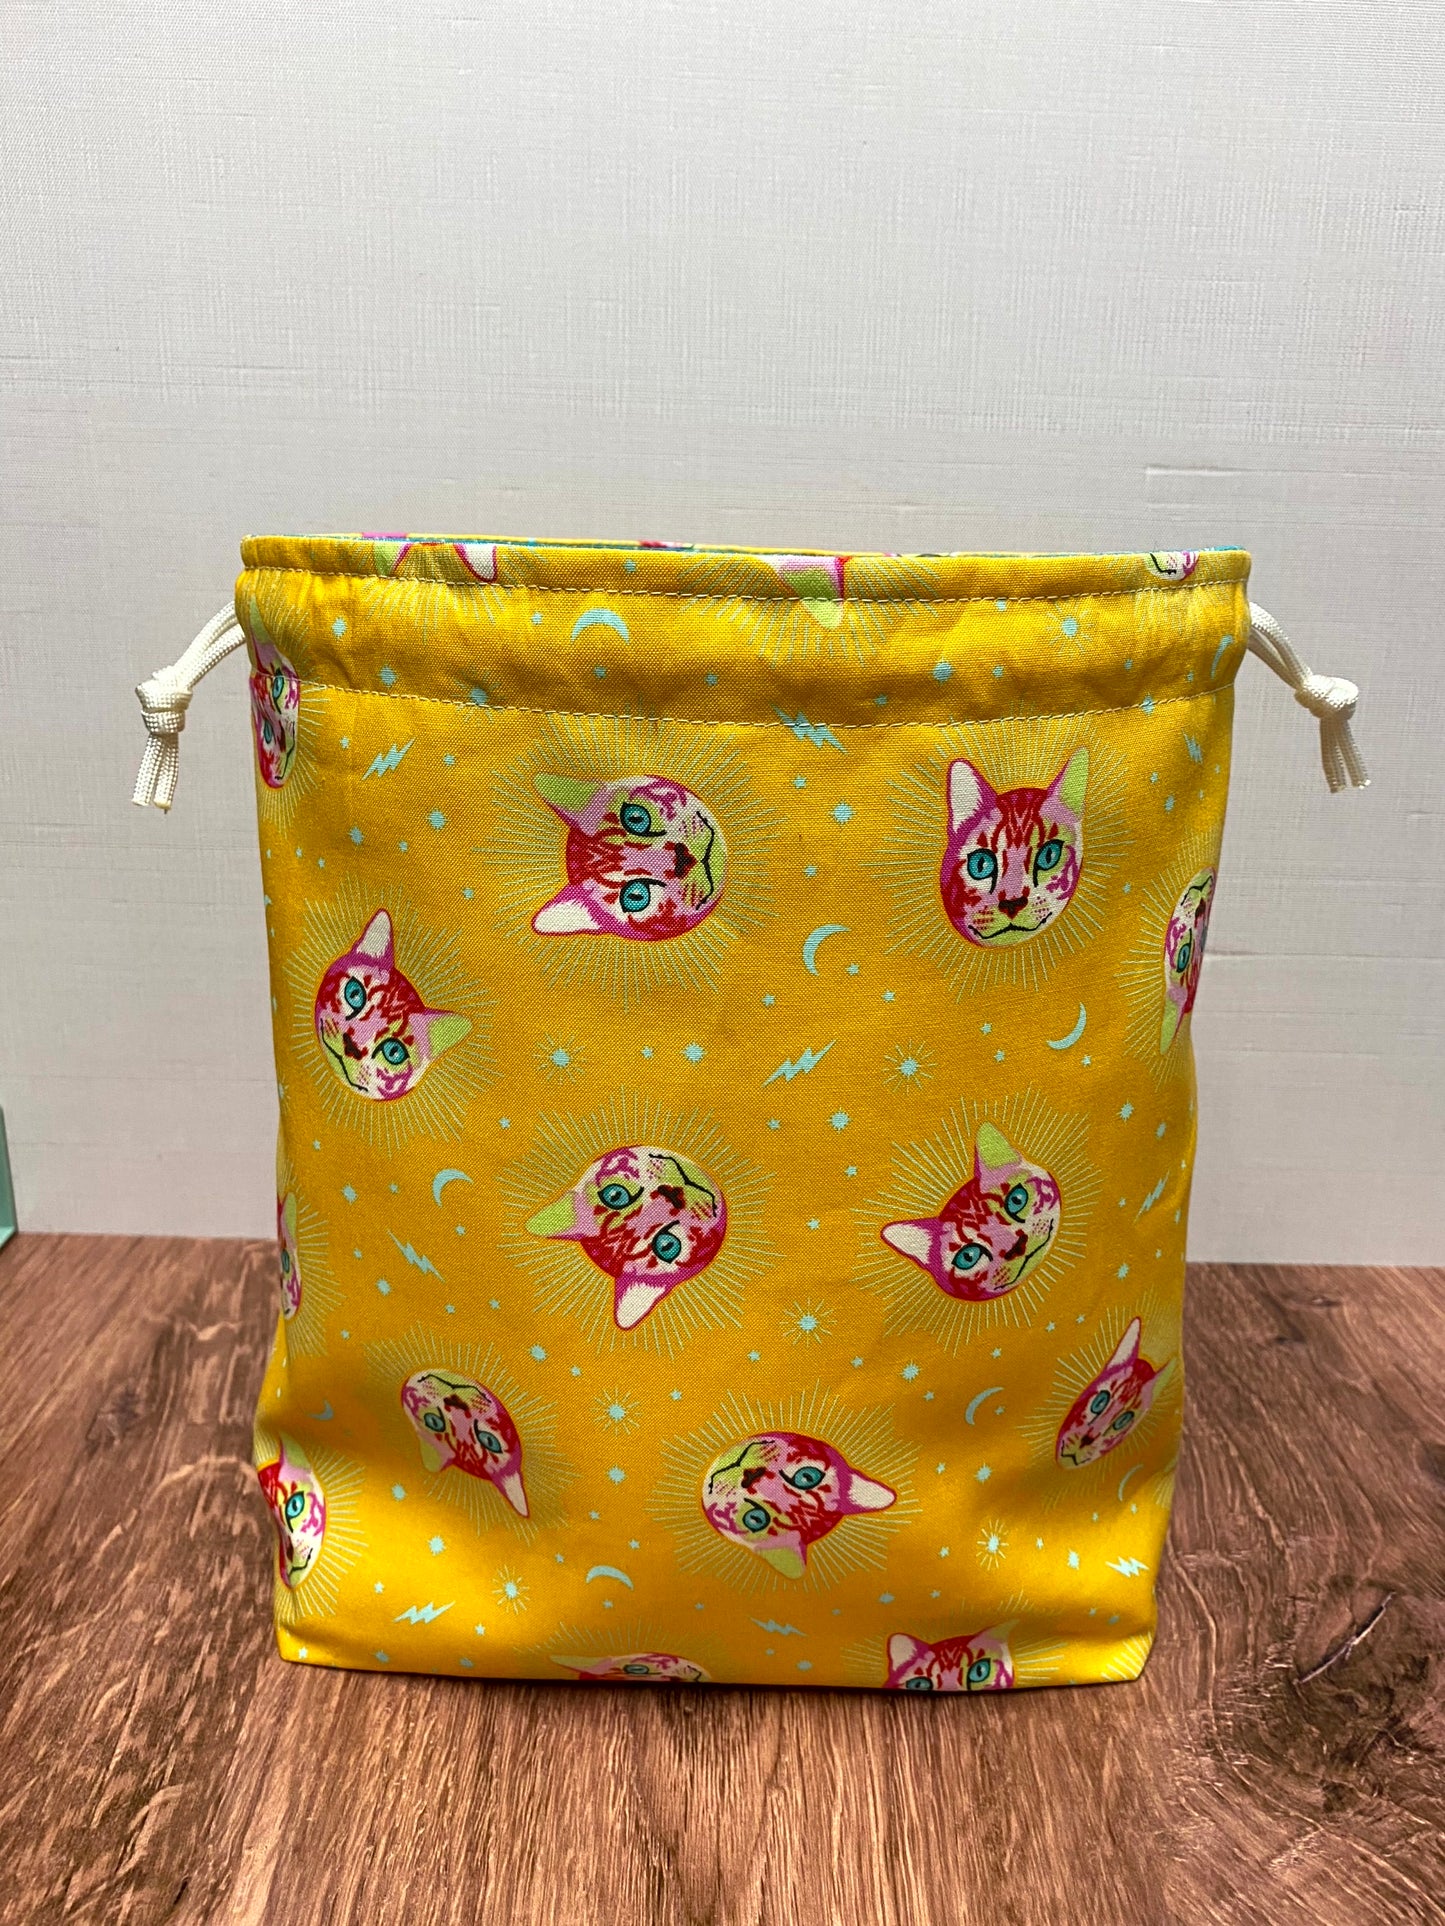 Cat Project Bag - Handmade - Drawstring Bag – Knitting Bag – Crochet Bag - Cross Stitch Bag - Toy Sack - Bingo Bag - Curiouser